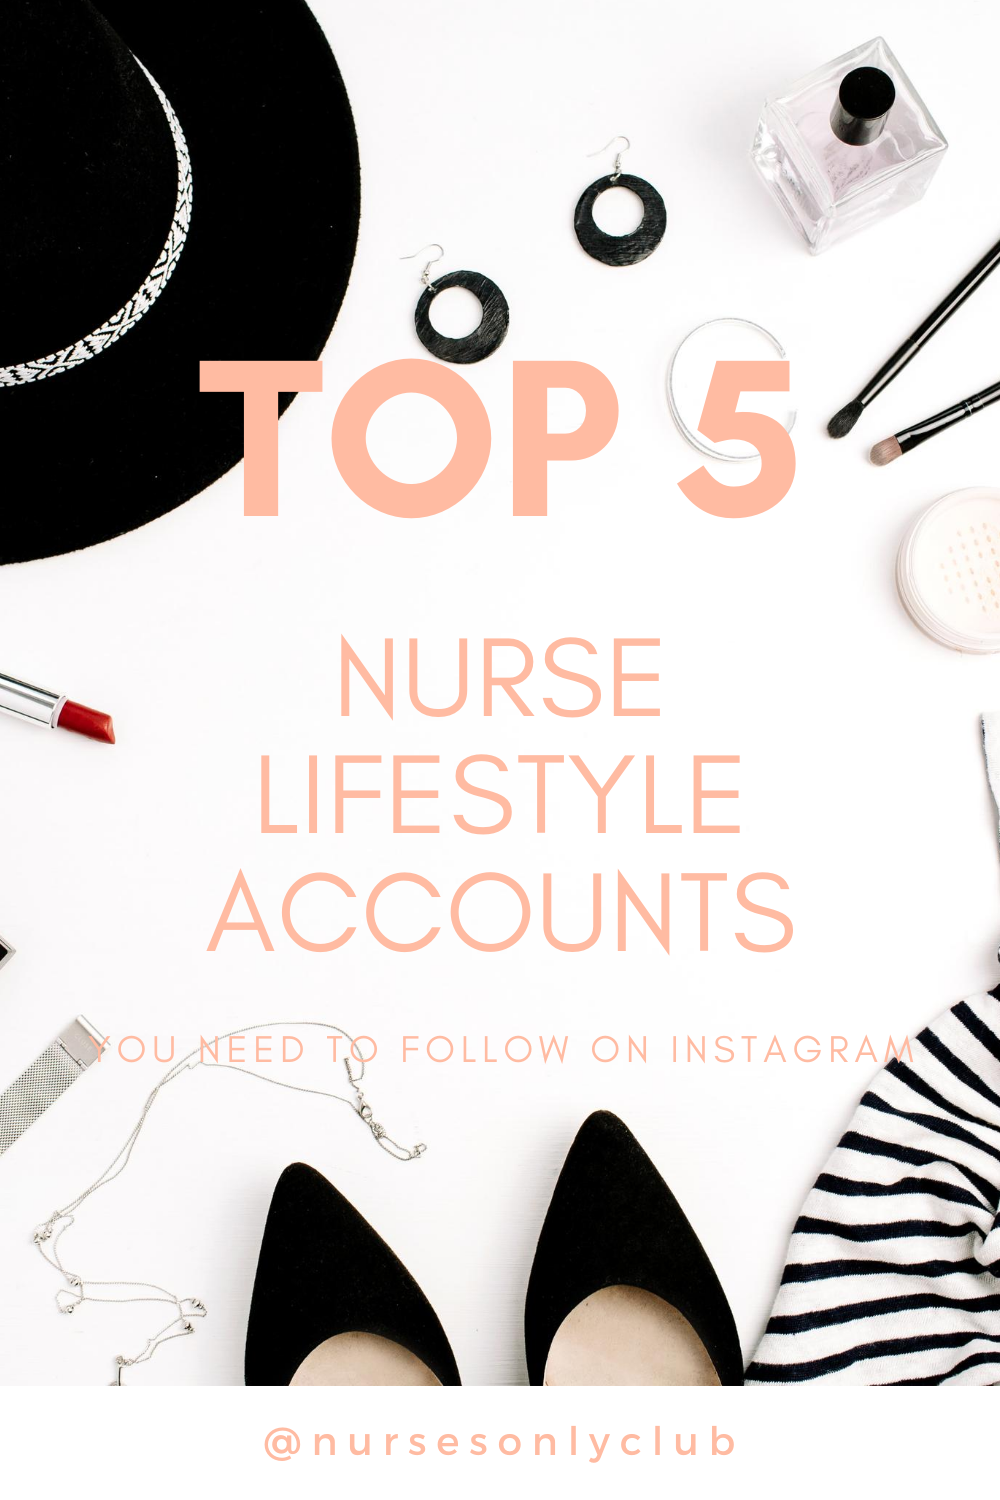 Top 5 nurse lifestyle accounts to follow on instagram